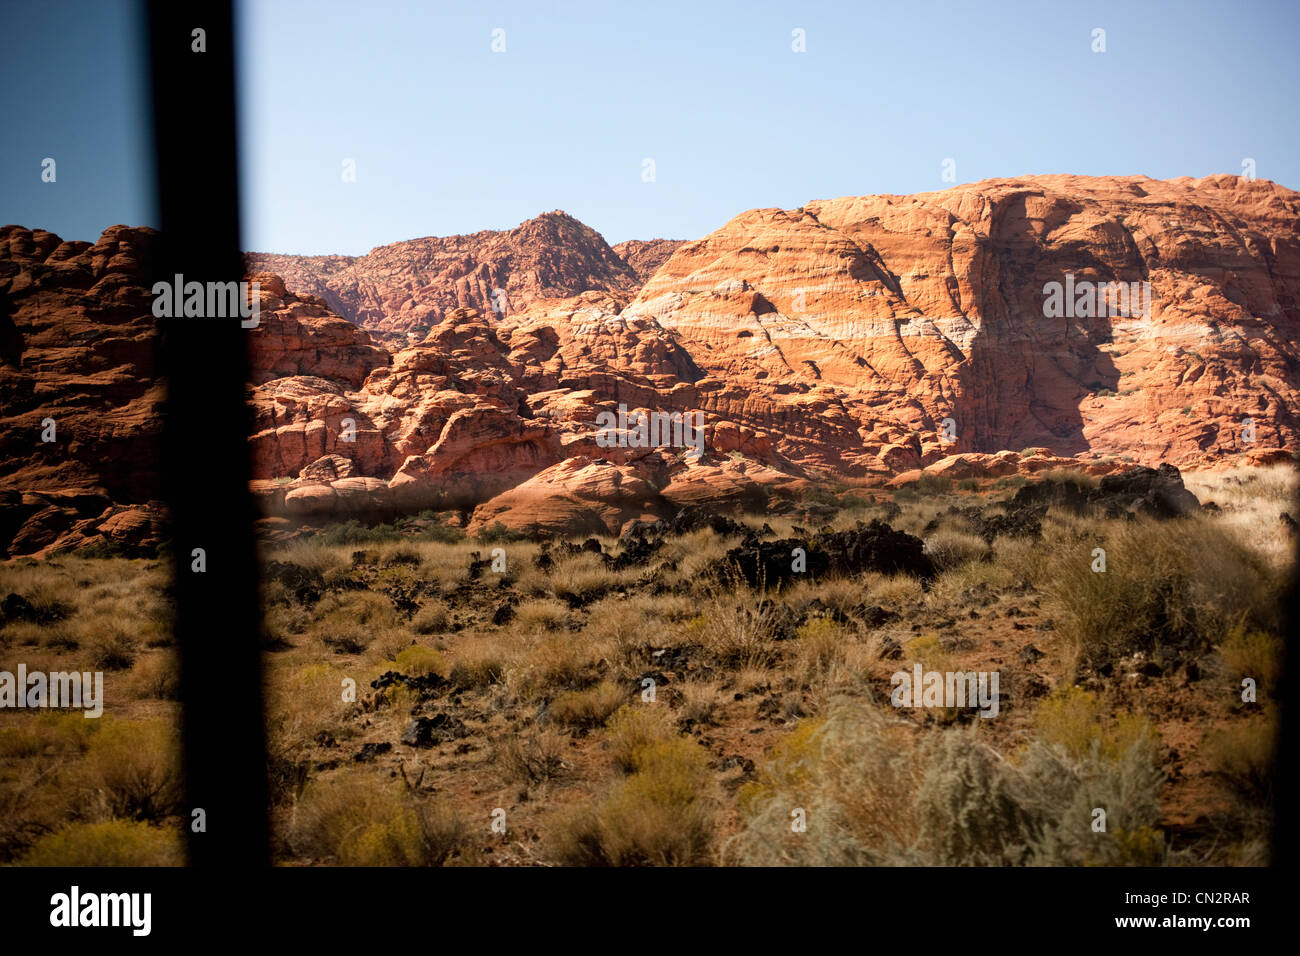 View of rocky landscape through car window, Utah, USA Stock Photo